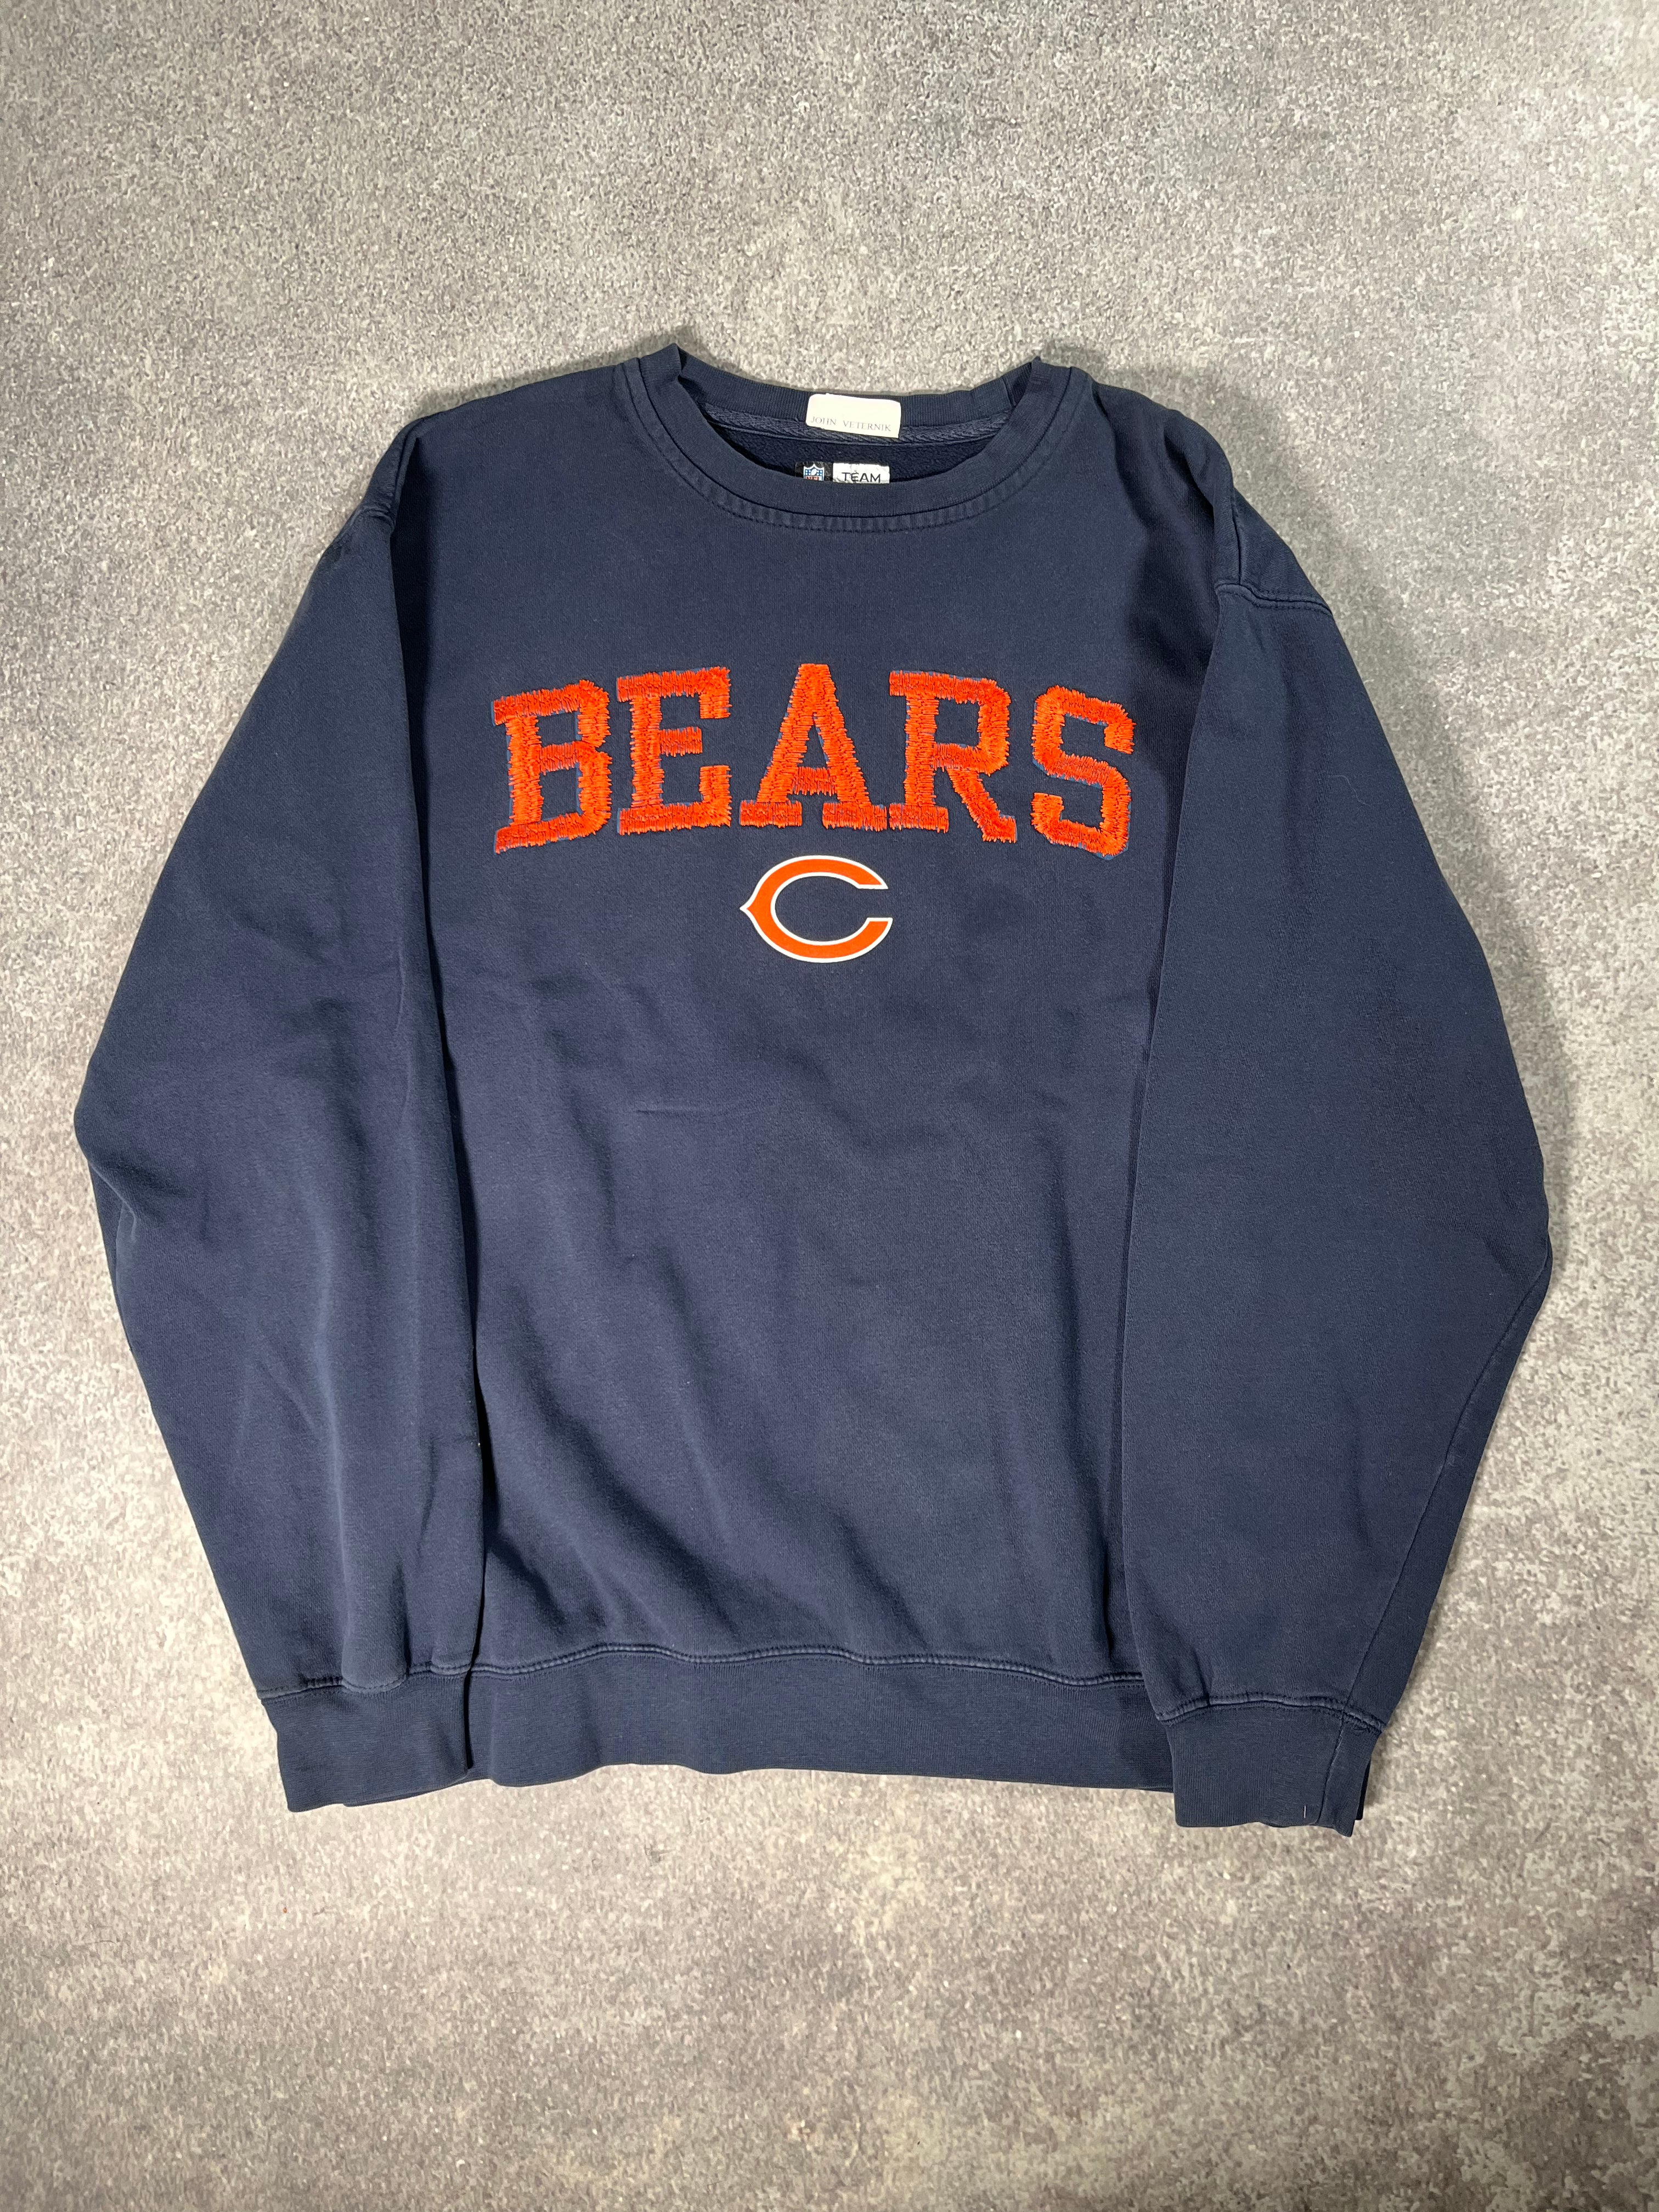 NFL Chicago Bears Logo Sweatshirt Navy // Large - RHAGHOUSE VINTAGE